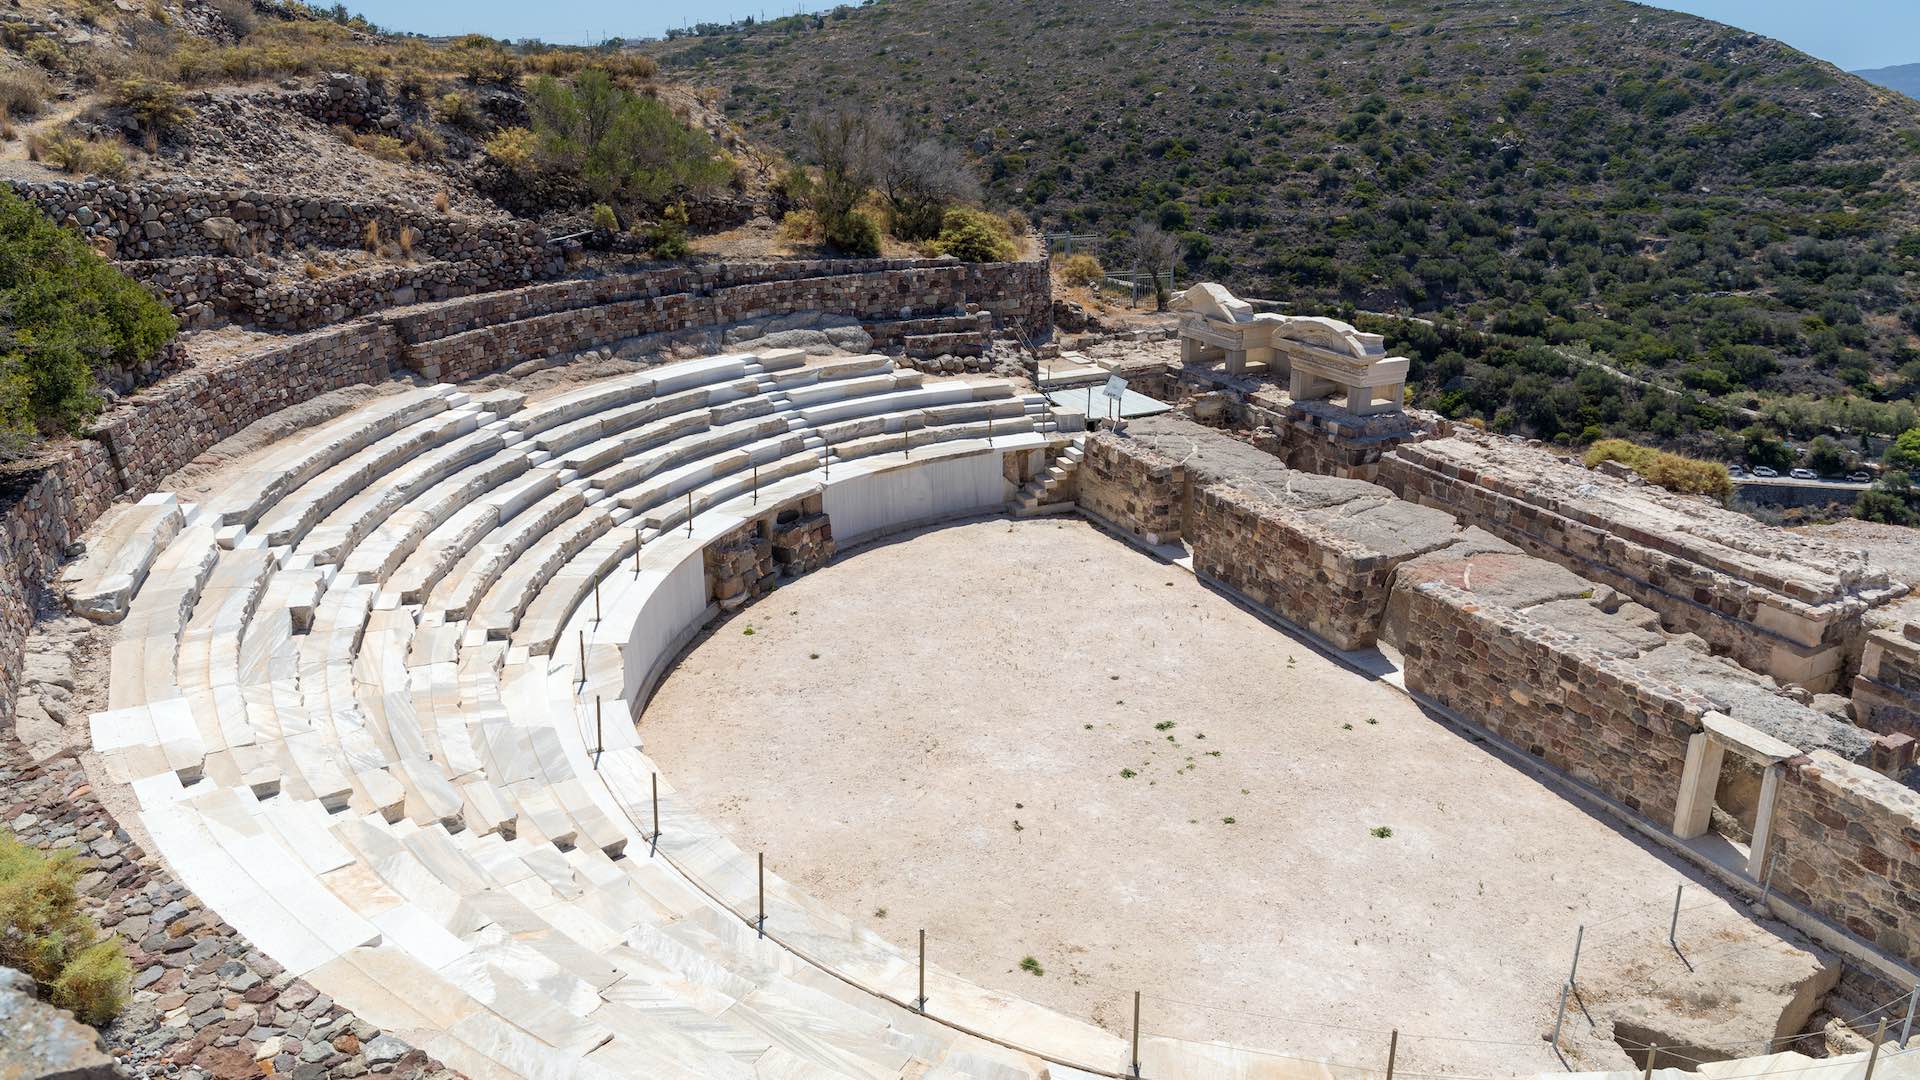 Ancient Theatre of Milos